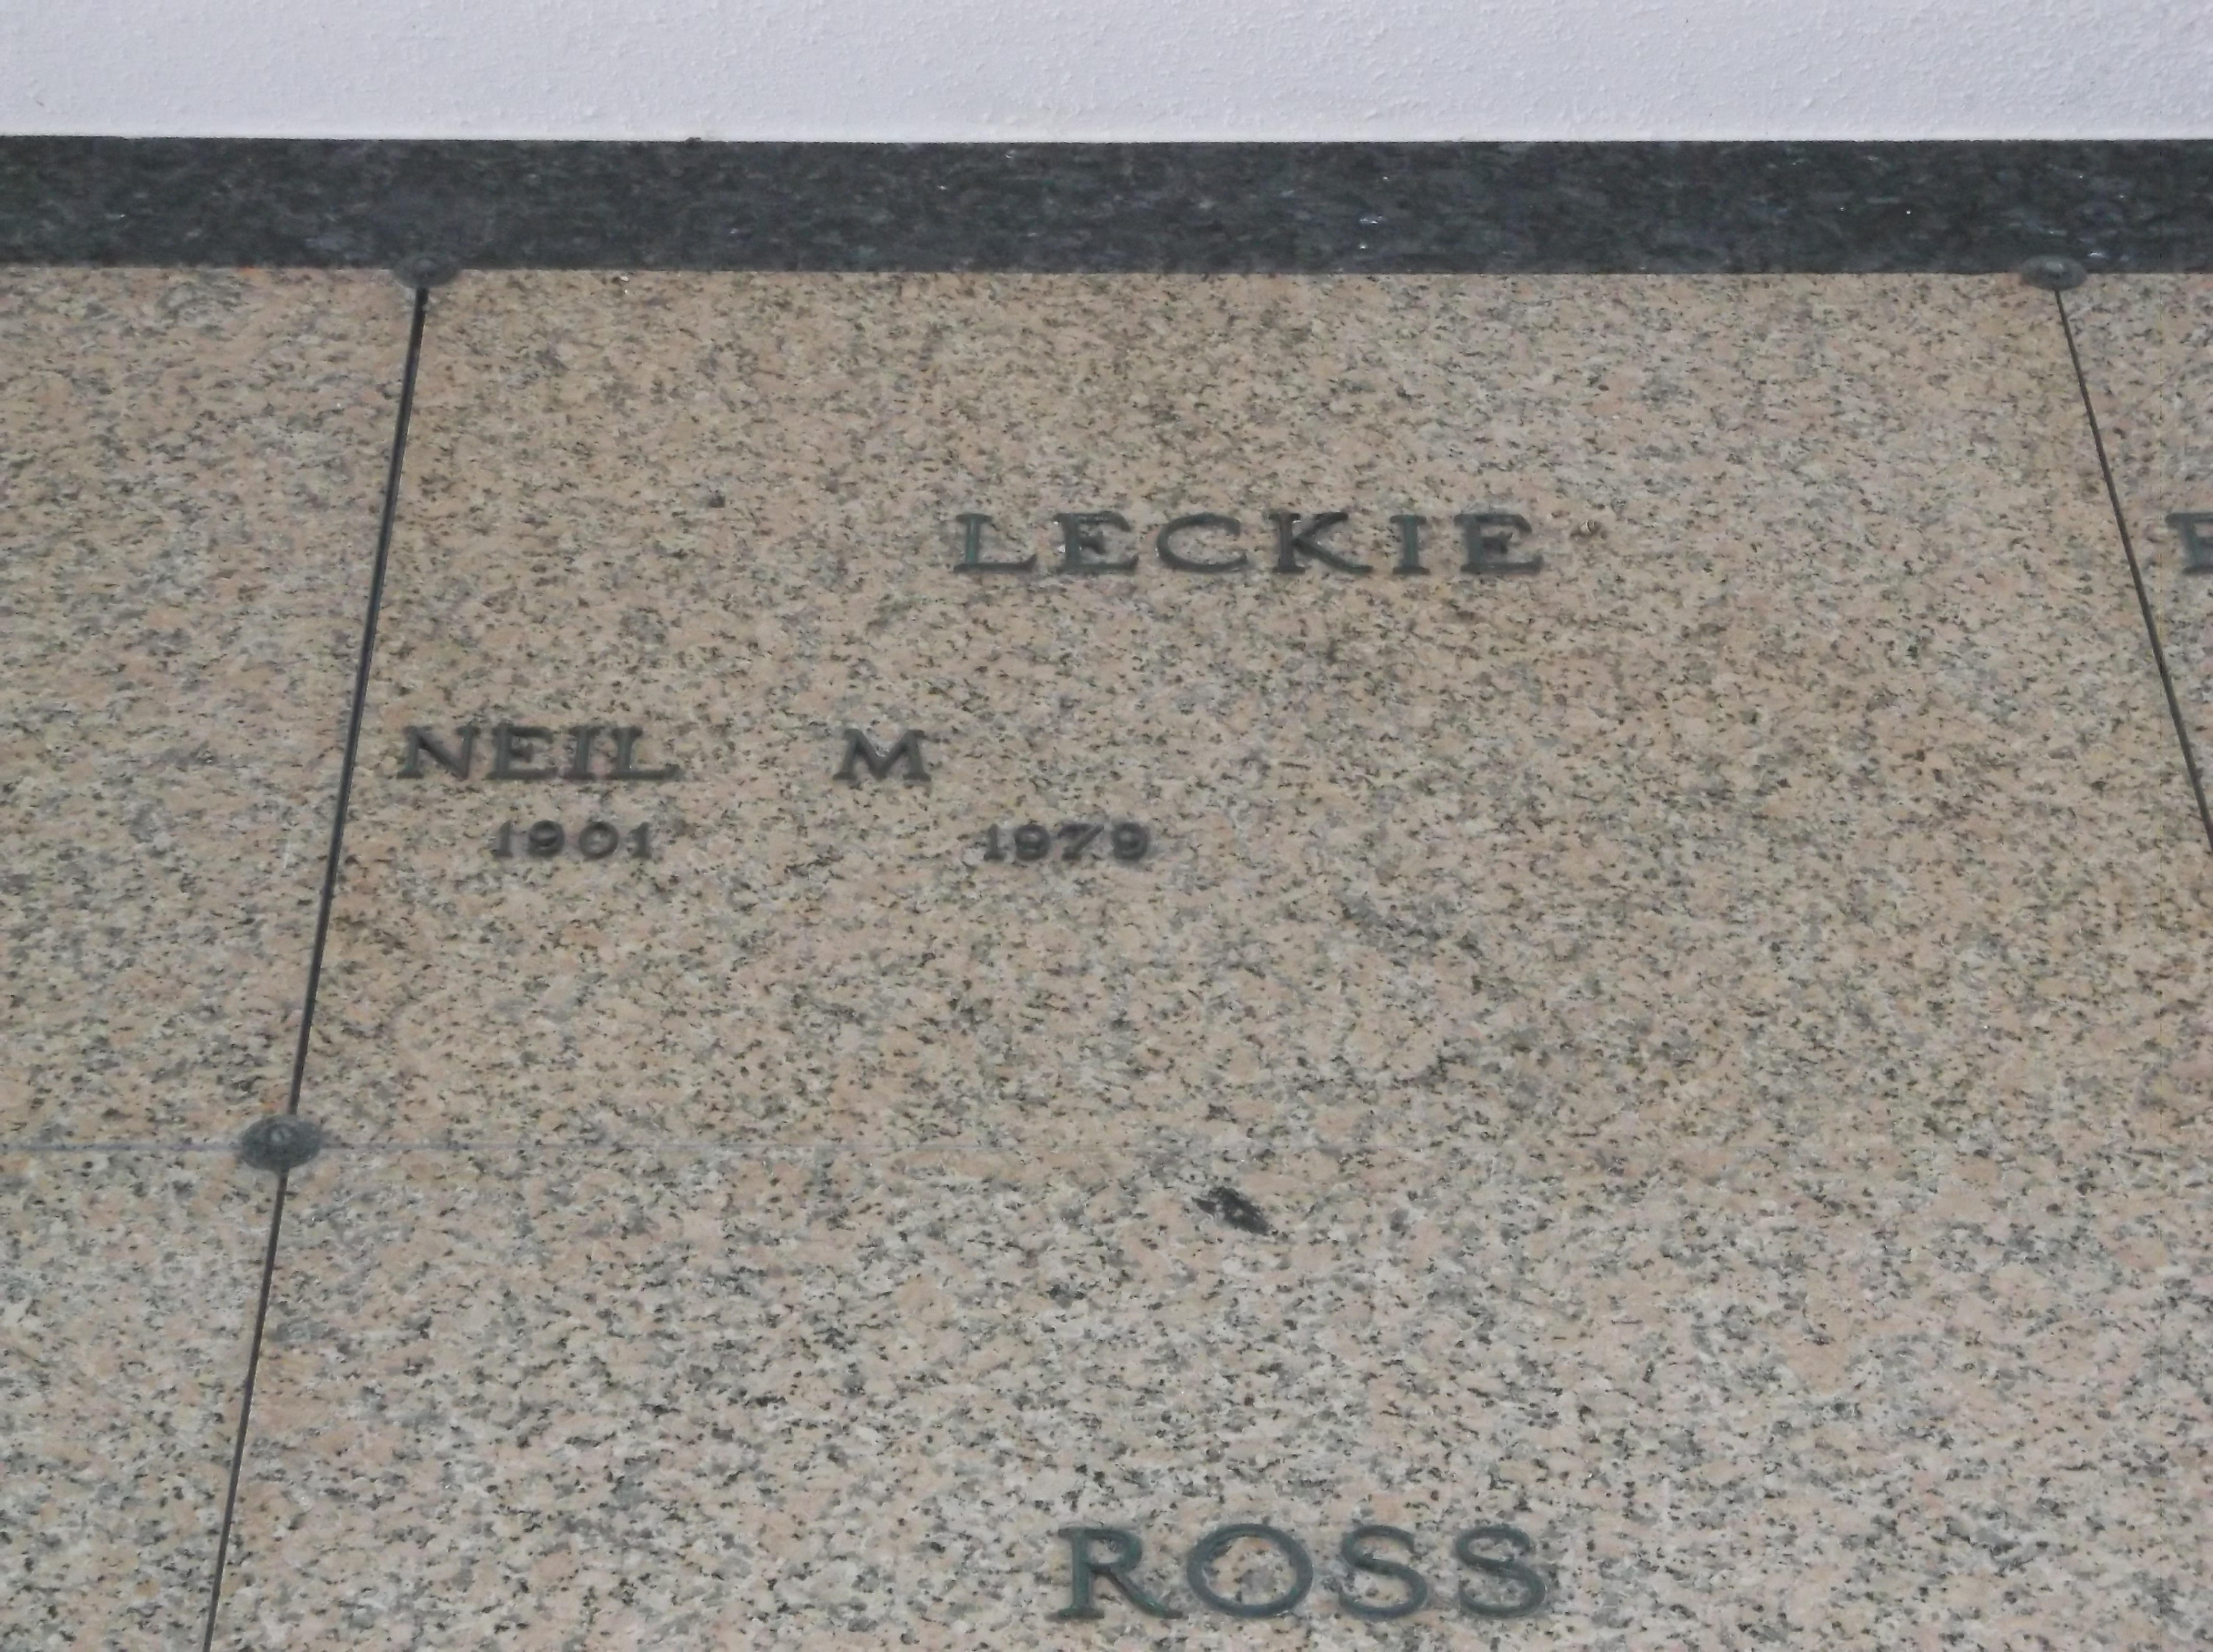 Neil M Leckie